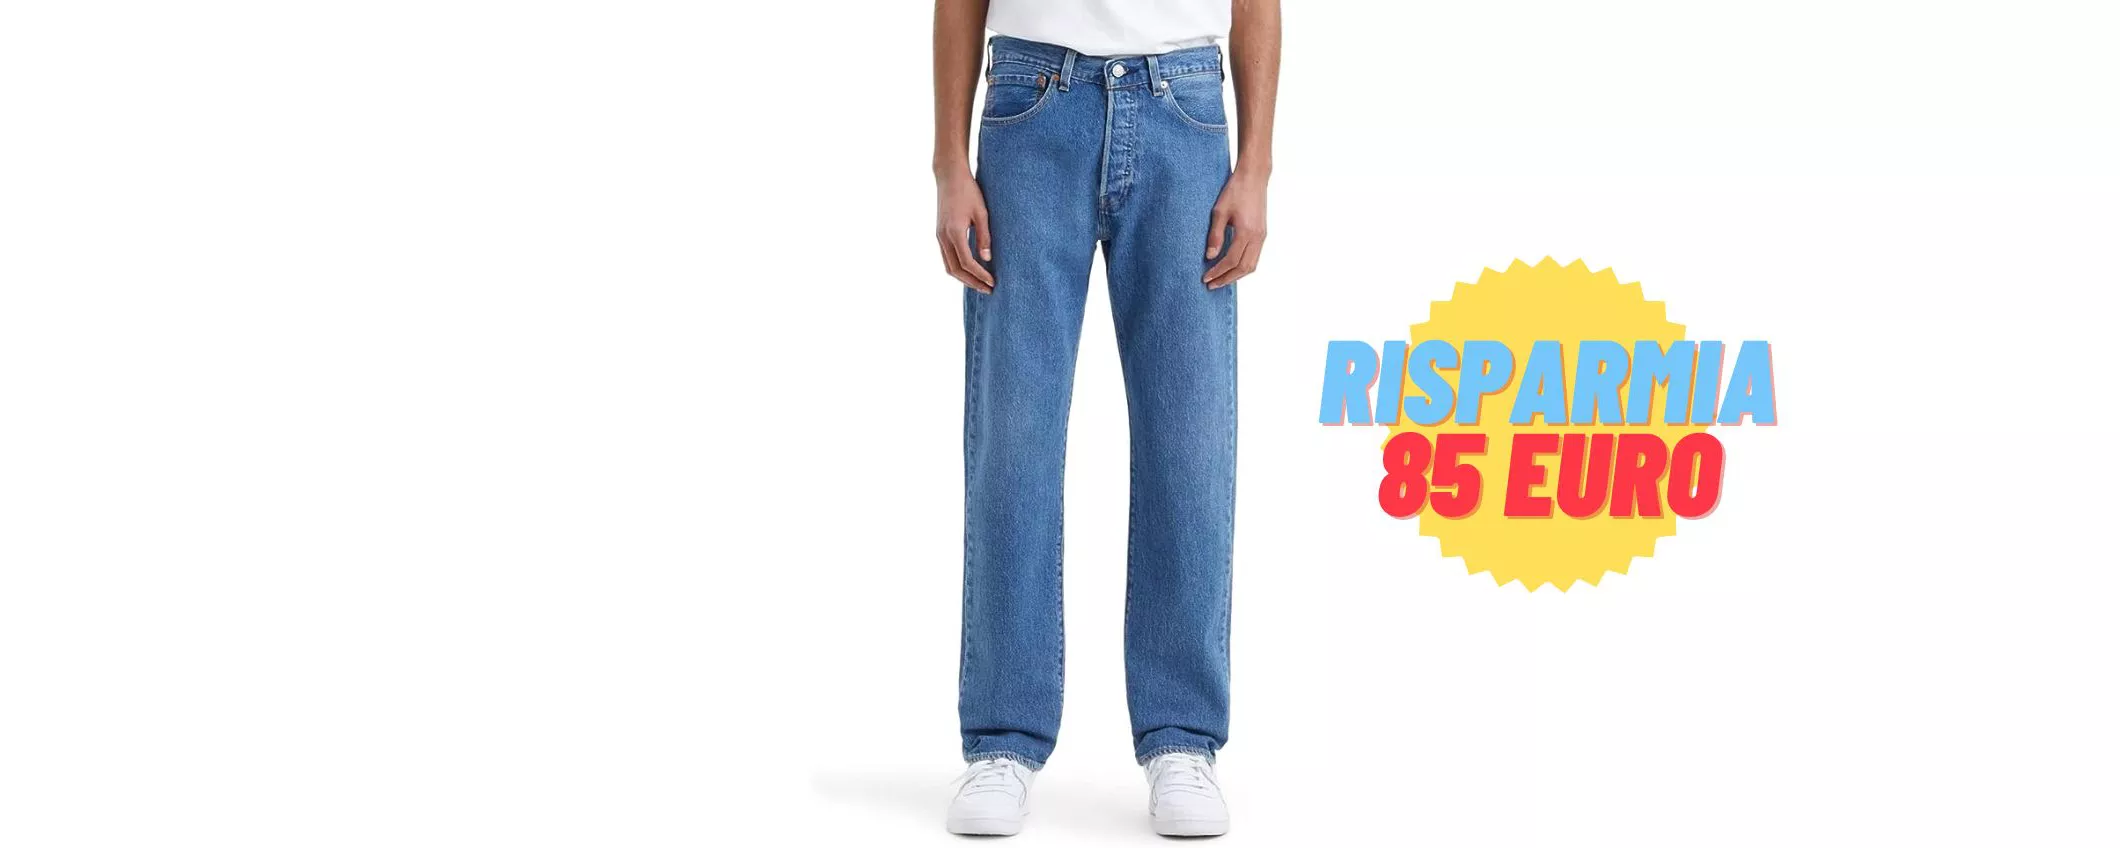 Levi's 501 Original Fit: i jeans PIÙ ICONICI a soli €35,99 (-70%)